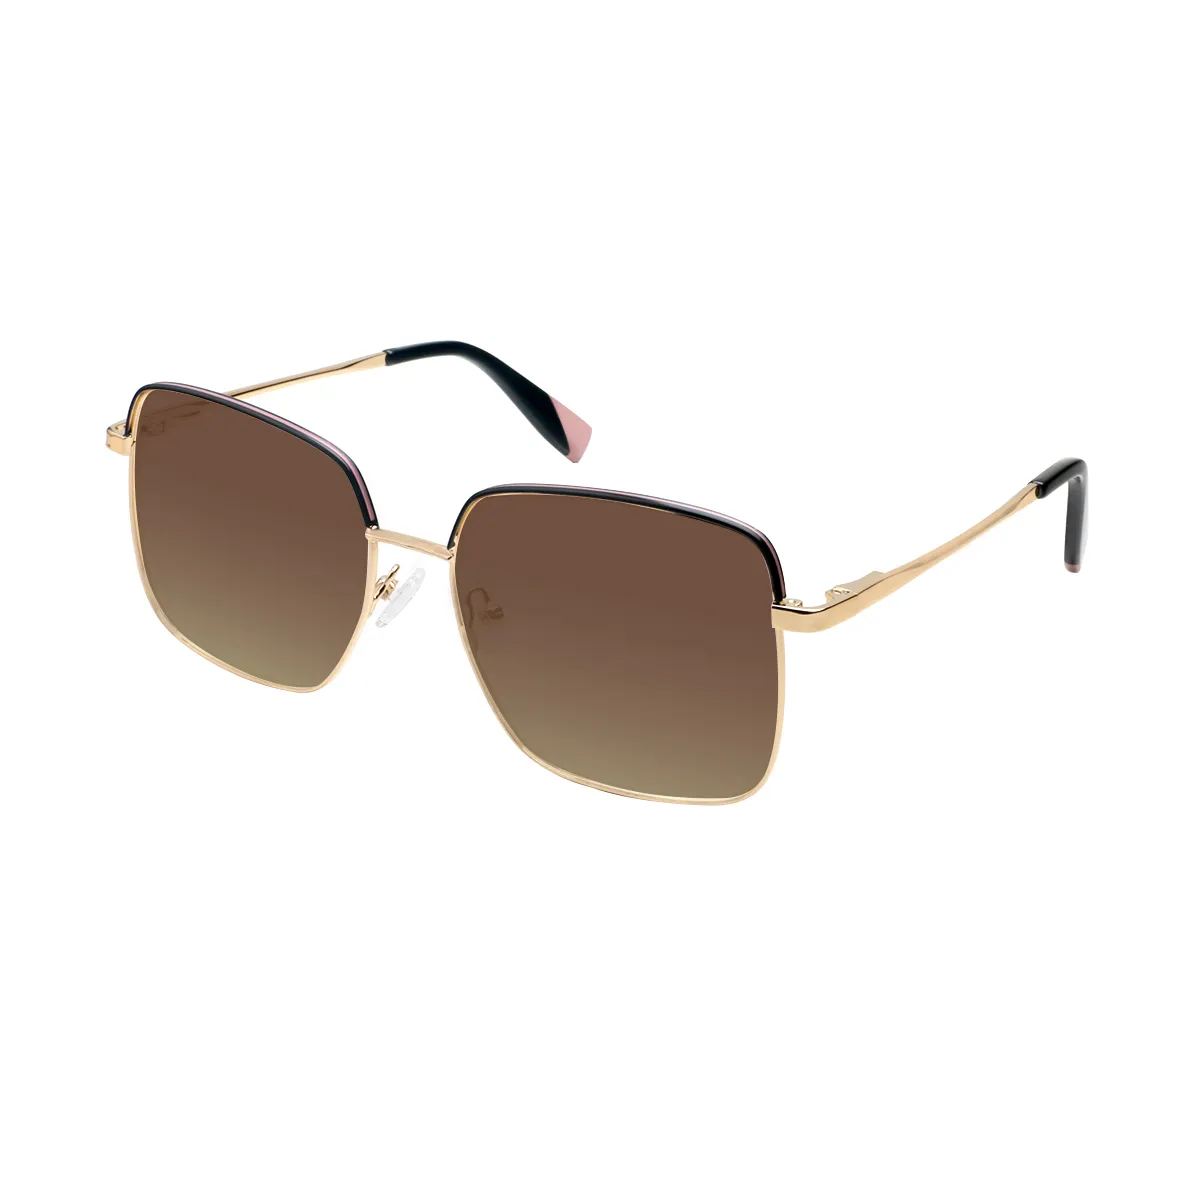 Regan - Square Gold Sunglasses for Women